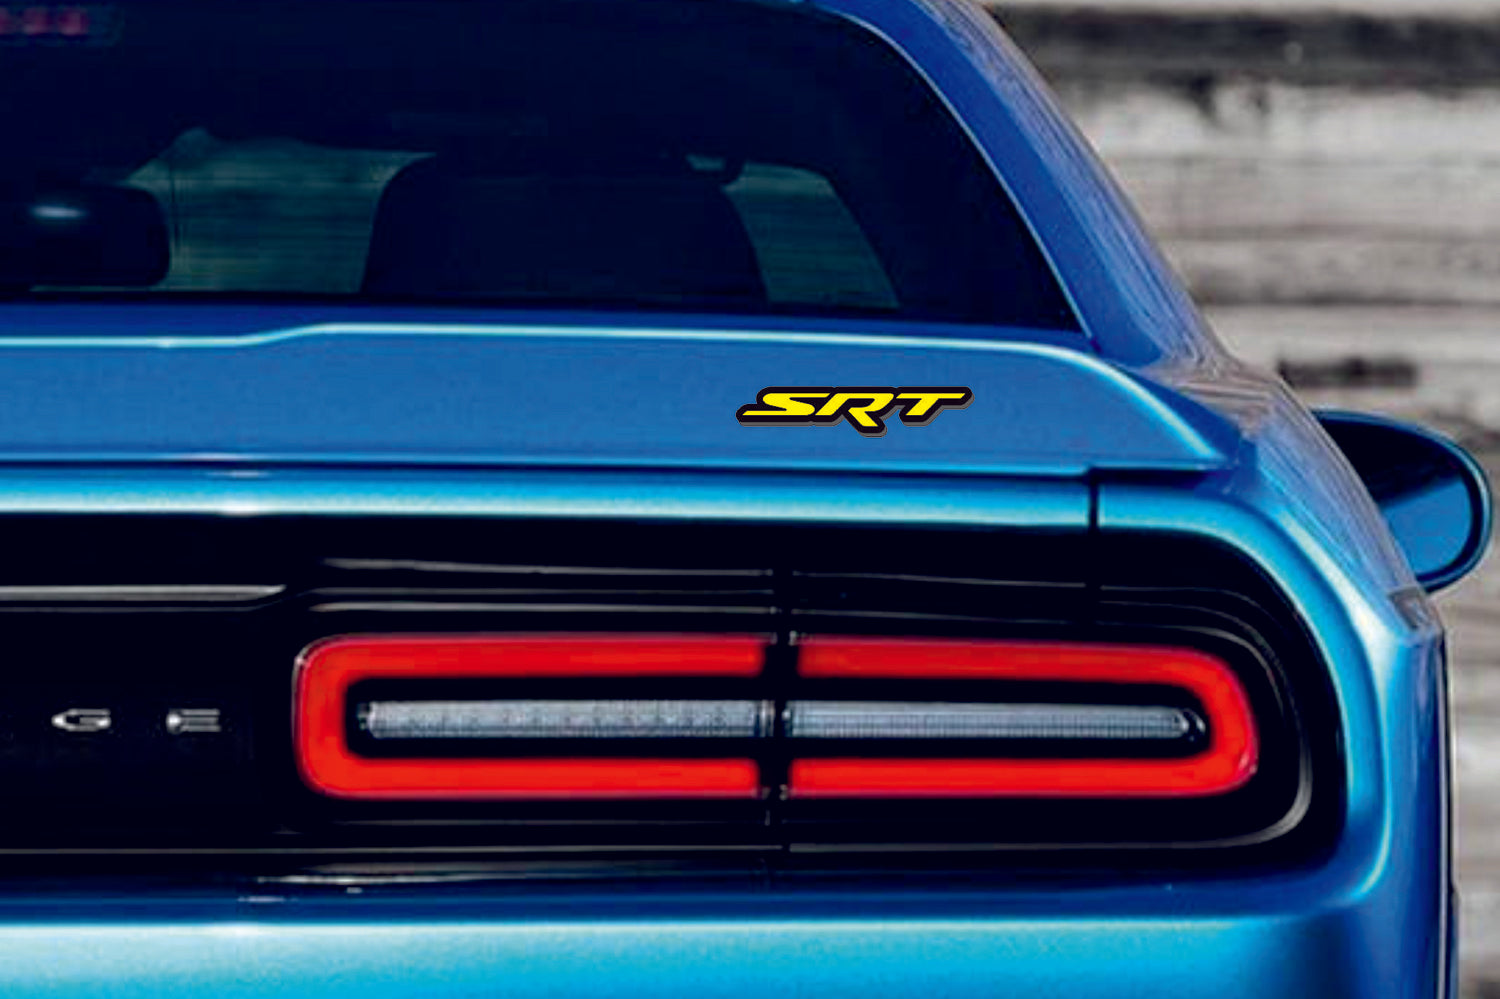 Chrysler tailgate trunk rear emblem with SRT logo